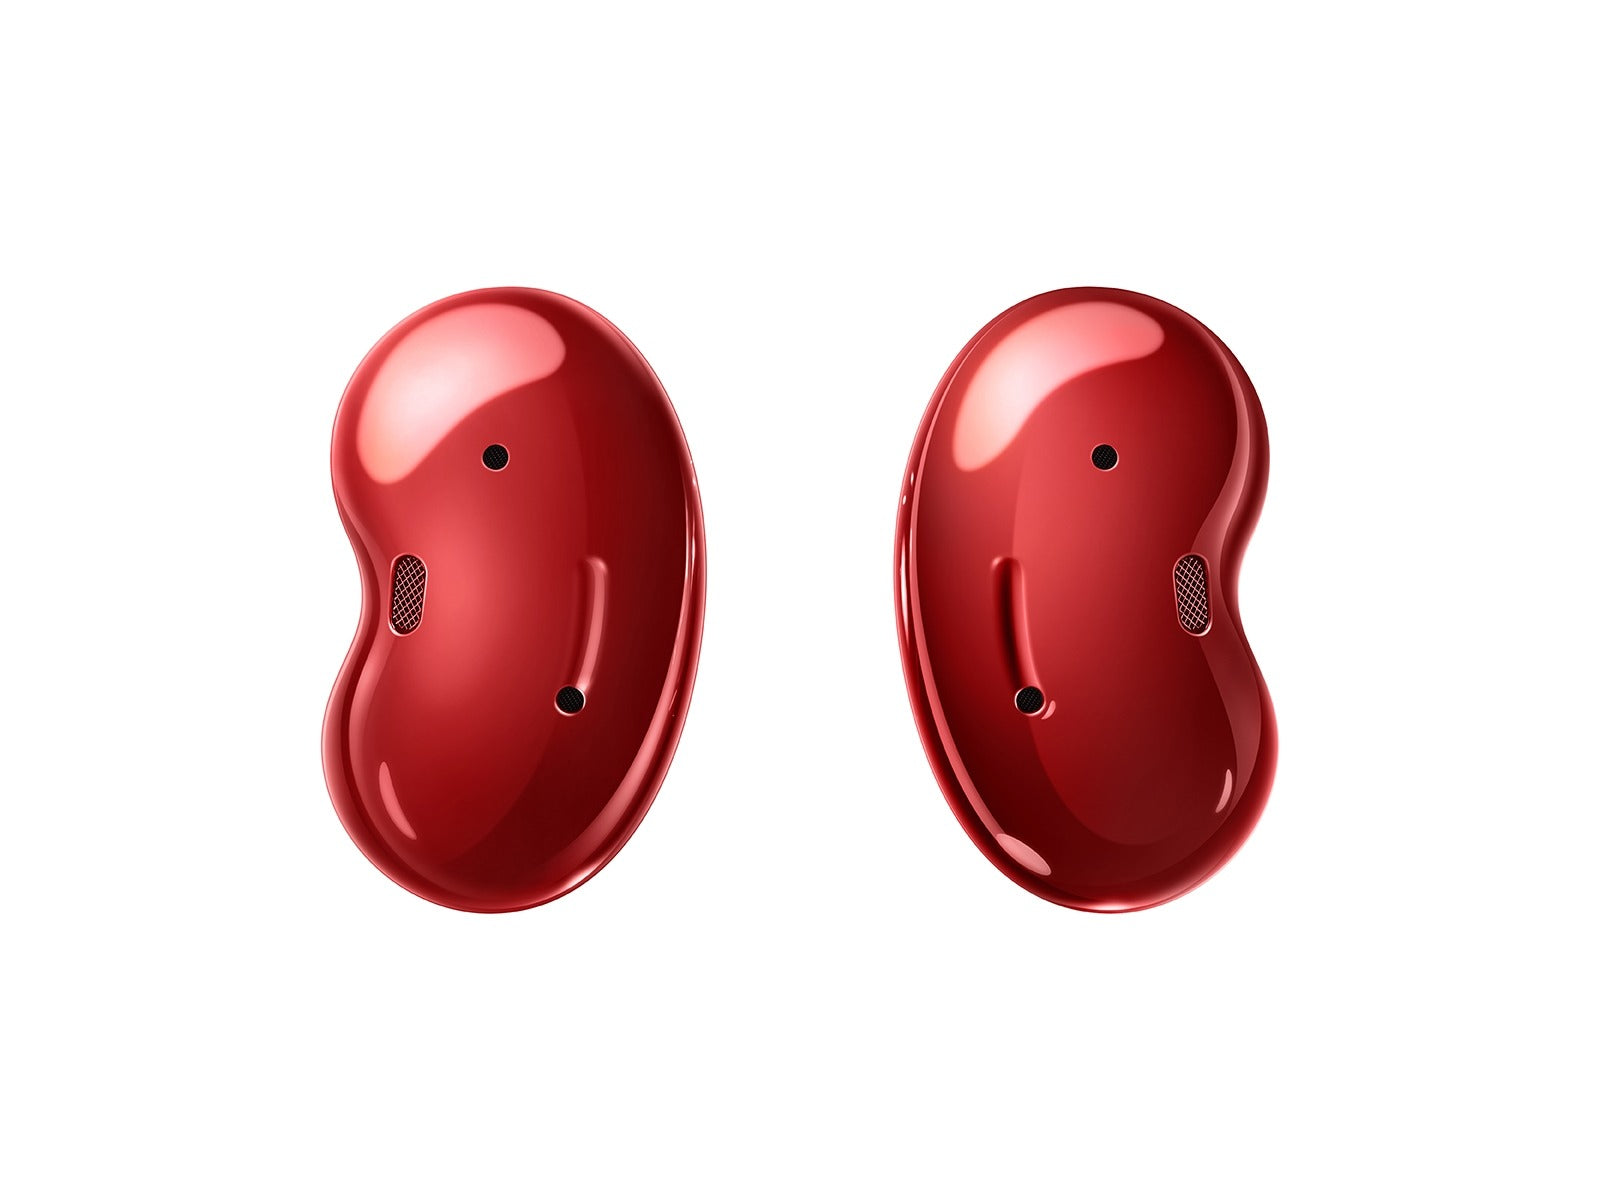 Samsung Galaxy Buds Live True Wireless Bluetooth Earbud Headphones - Mystic Red (New)